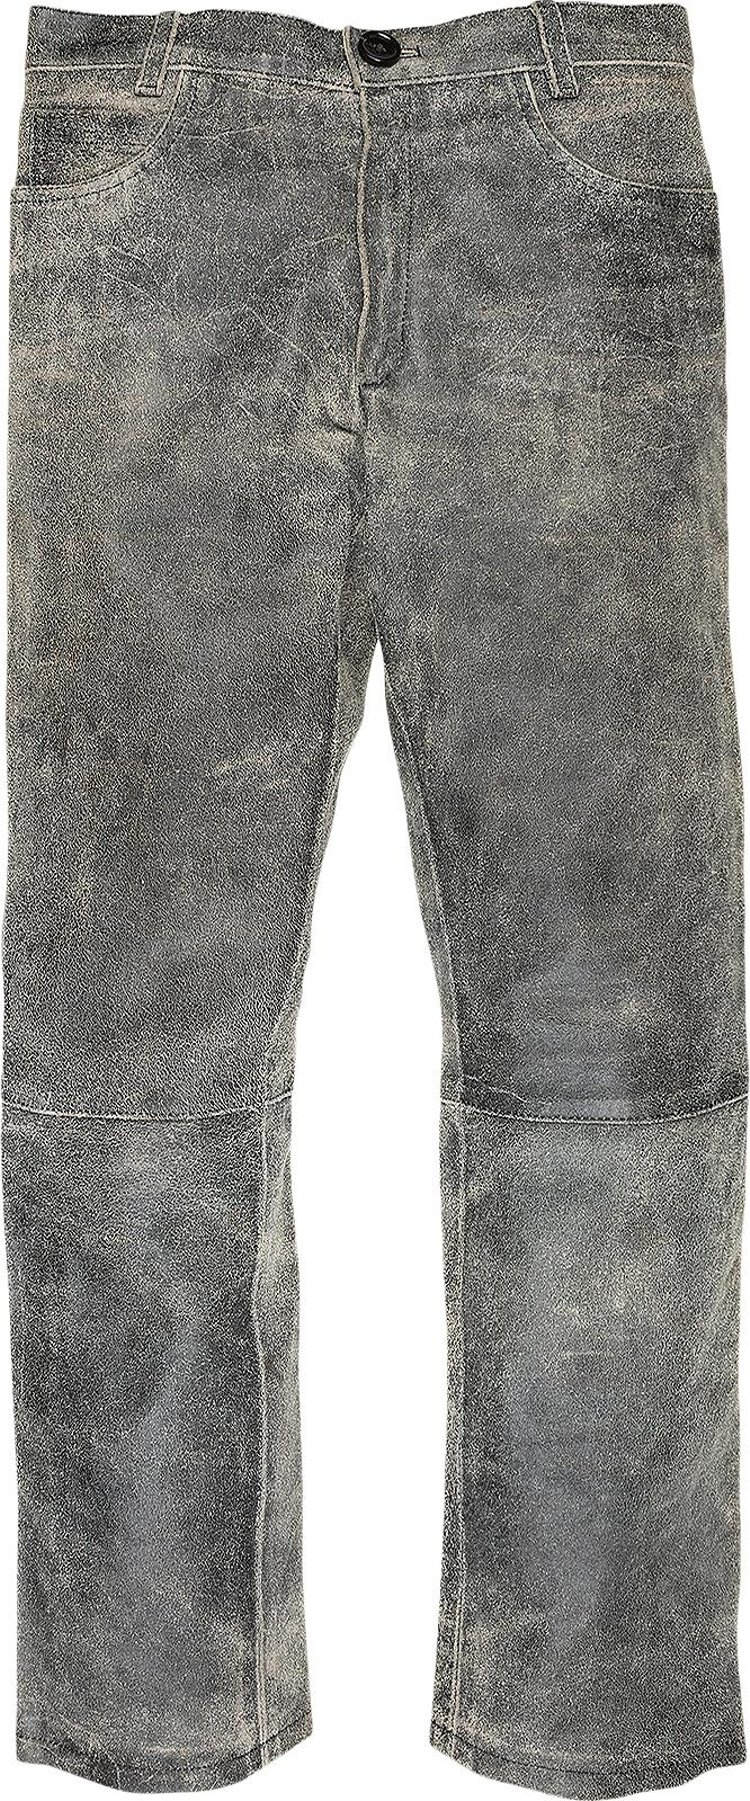 Vintage Raf Simons Distressed Leather Pants 'Grey'